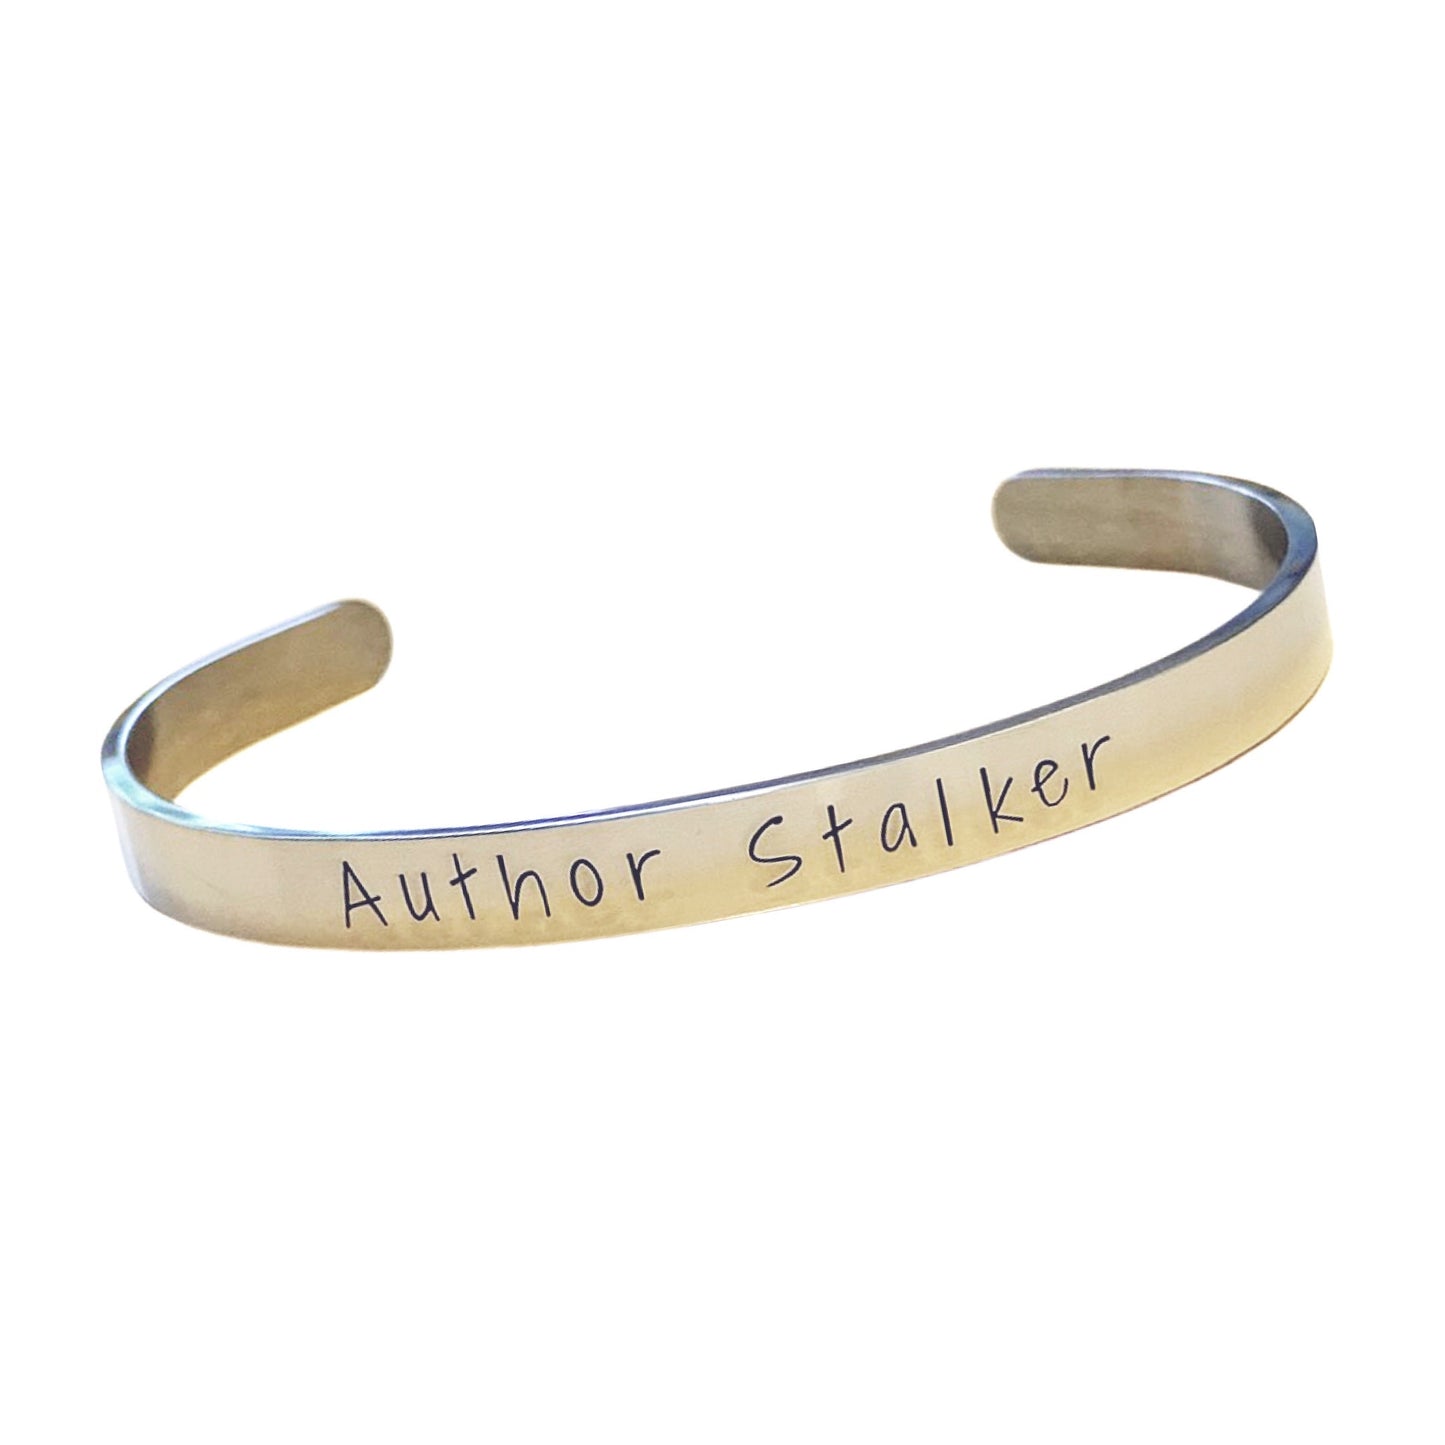 Author Stalker - Cuff Bracelet